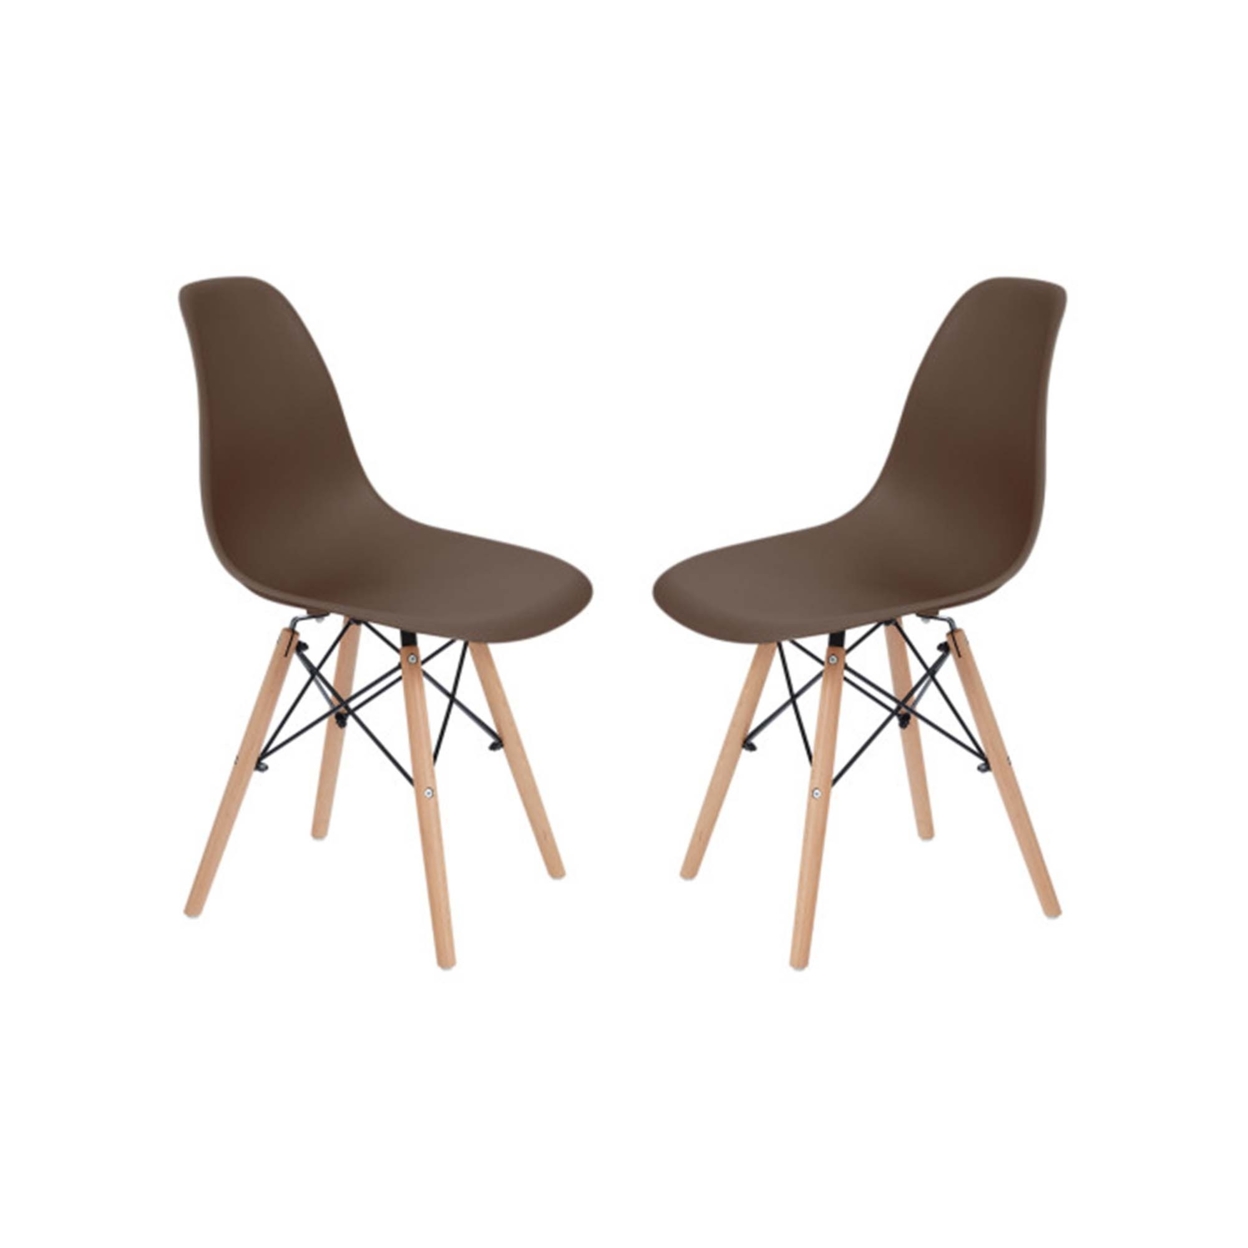 Allan Plastic Side Dining Chair w/ Wood Legs